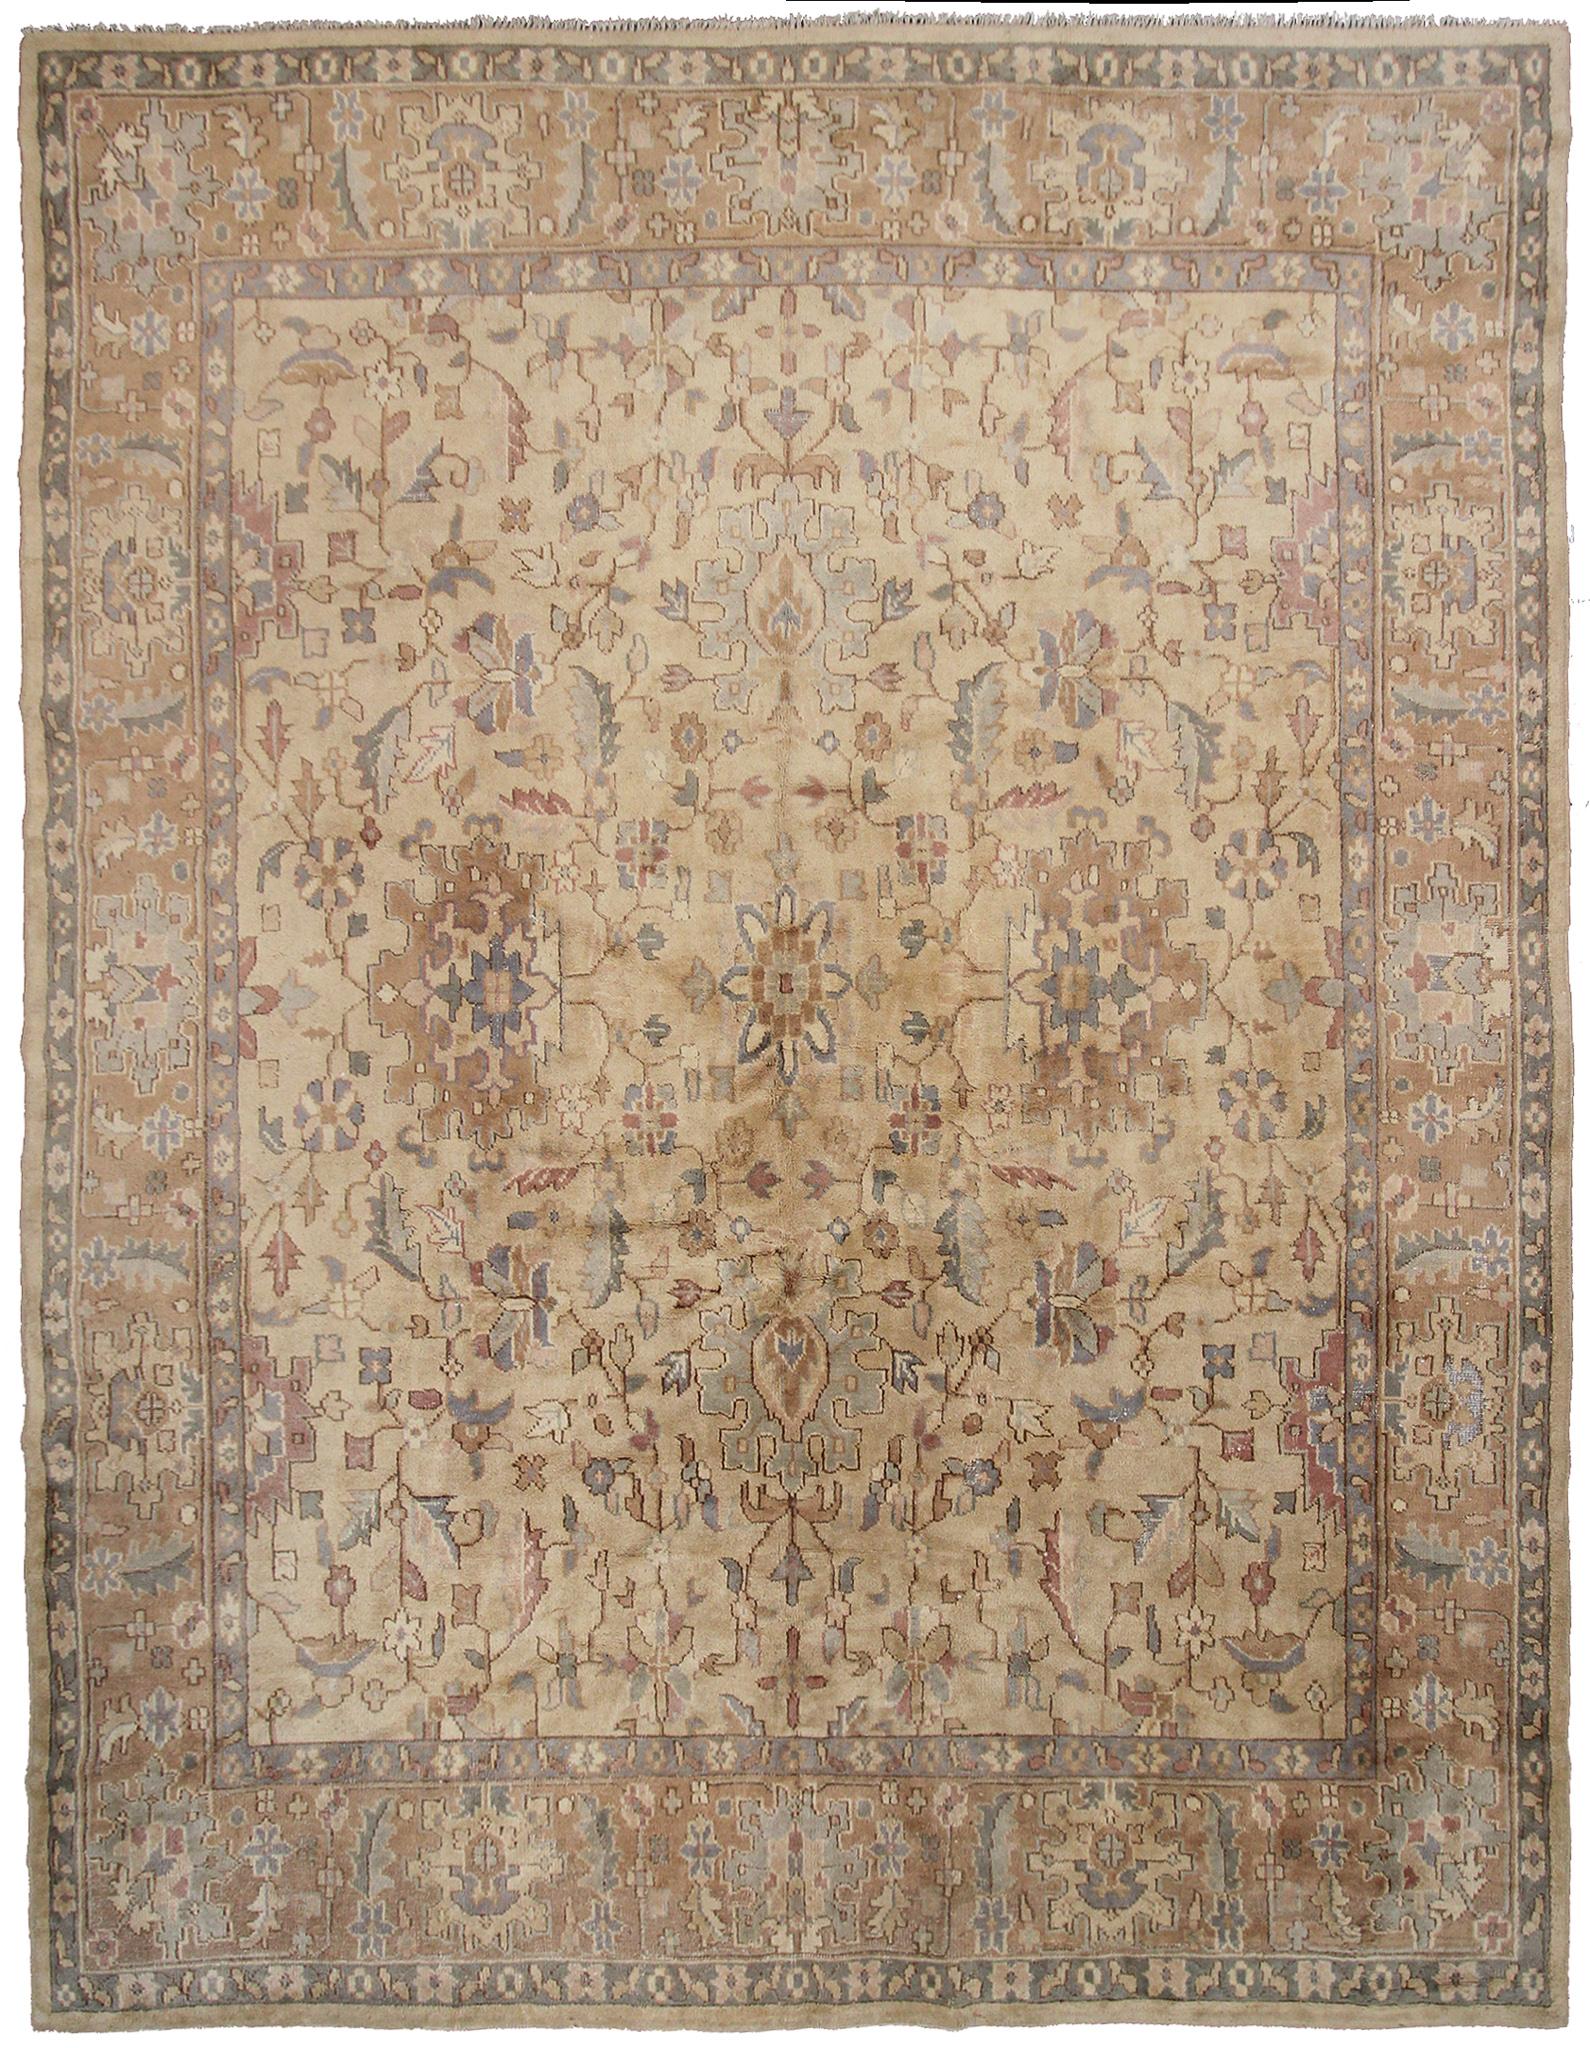 Antique oushak handmade carpet oushak wool rug 
Measures: 8'2